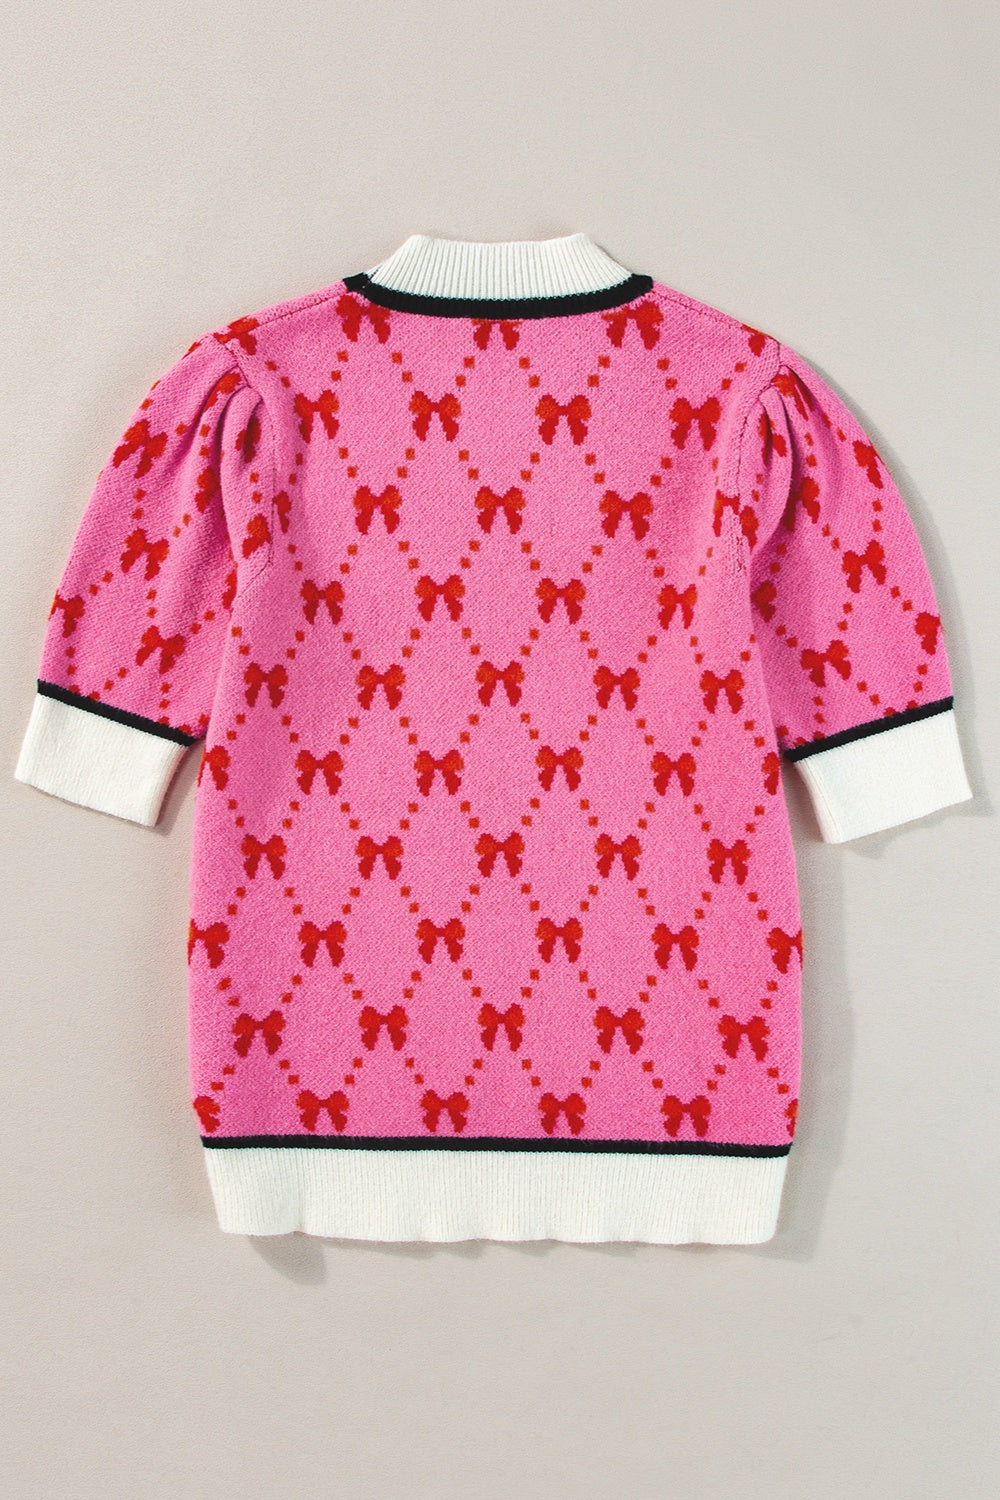 TEEK - Hot Pink Mock Neck Half Sleeve Knit Top TOPS TEEK Trend   